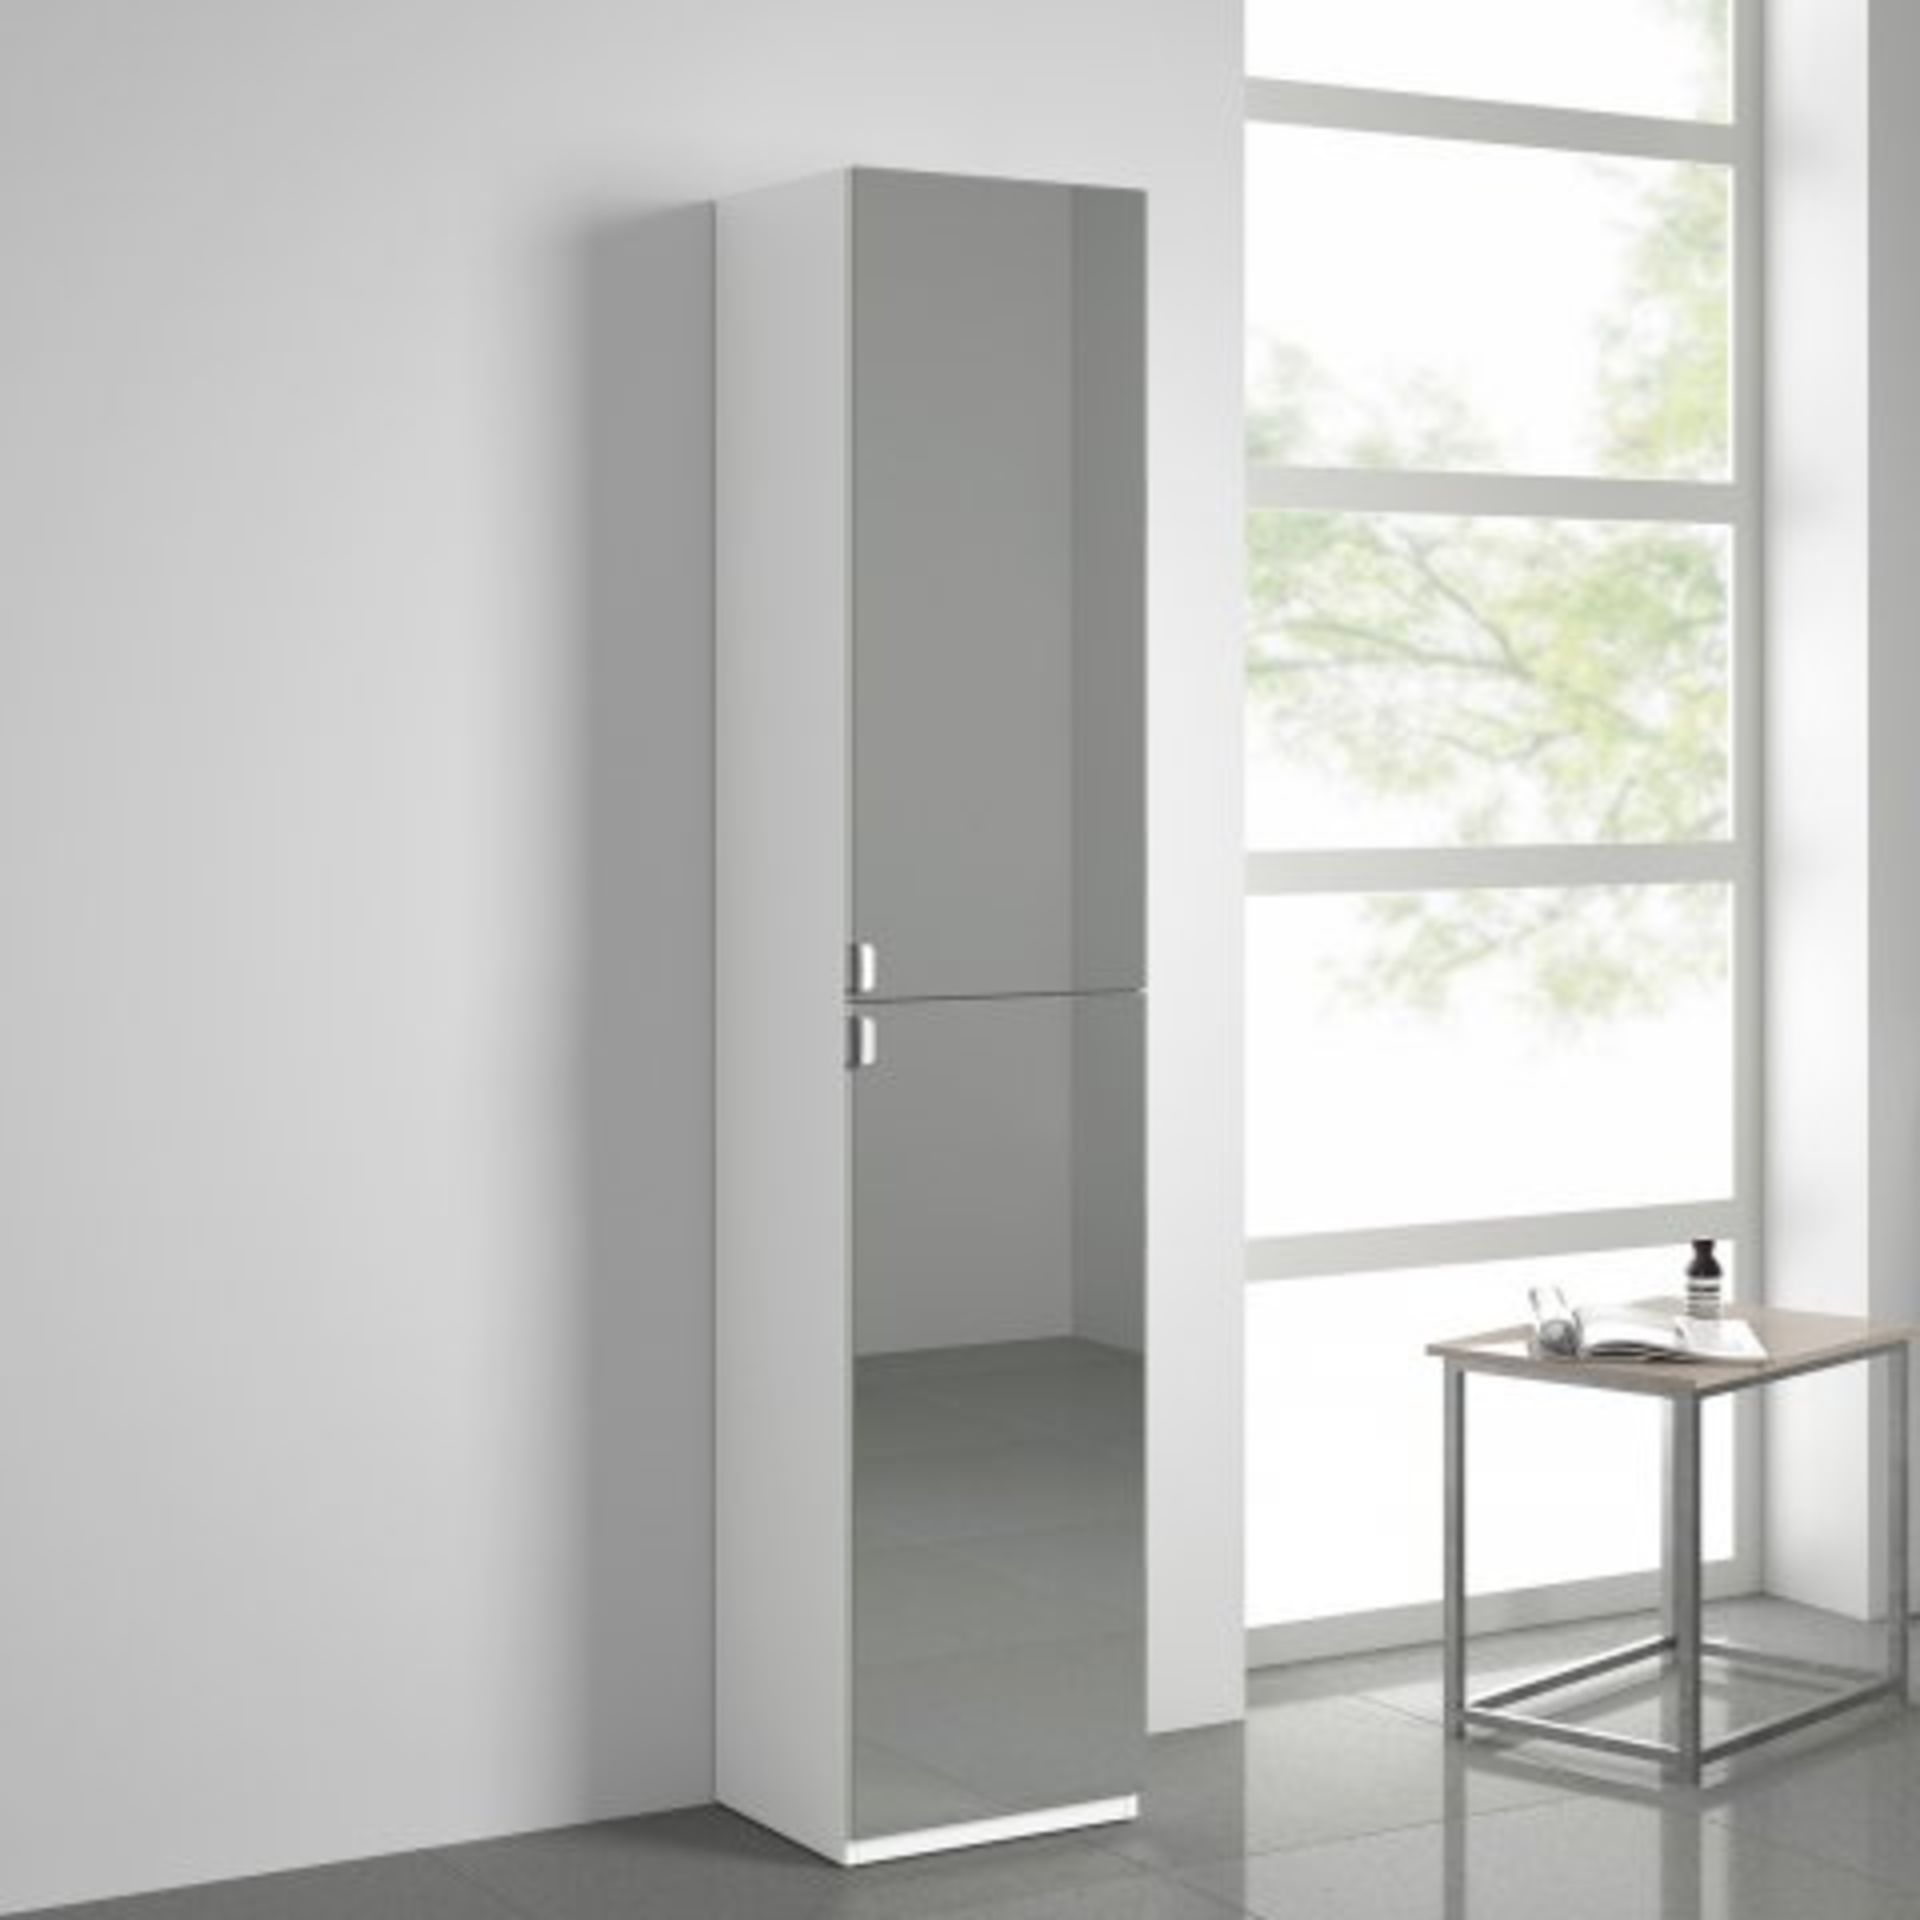 (K27) 1700x350mm Mirrored Door Matte White Tall Storage Cabinet - Floor Standing. RRP £339.99. - Image 4 of 5